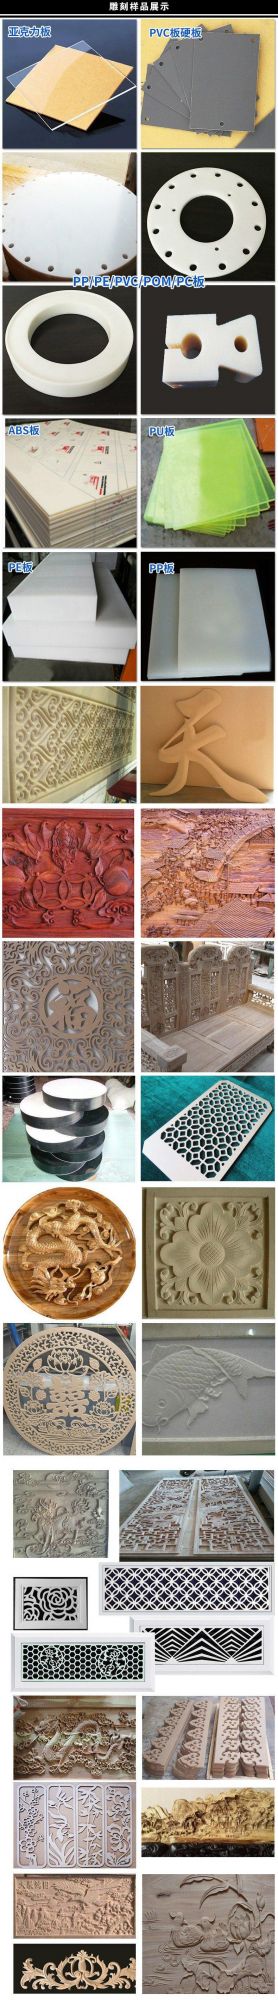 Mintech Wholesale CNC Engraving Machine China Supply CNC Router for Aluminum/Copper/Wood/Acrylic/Plastic